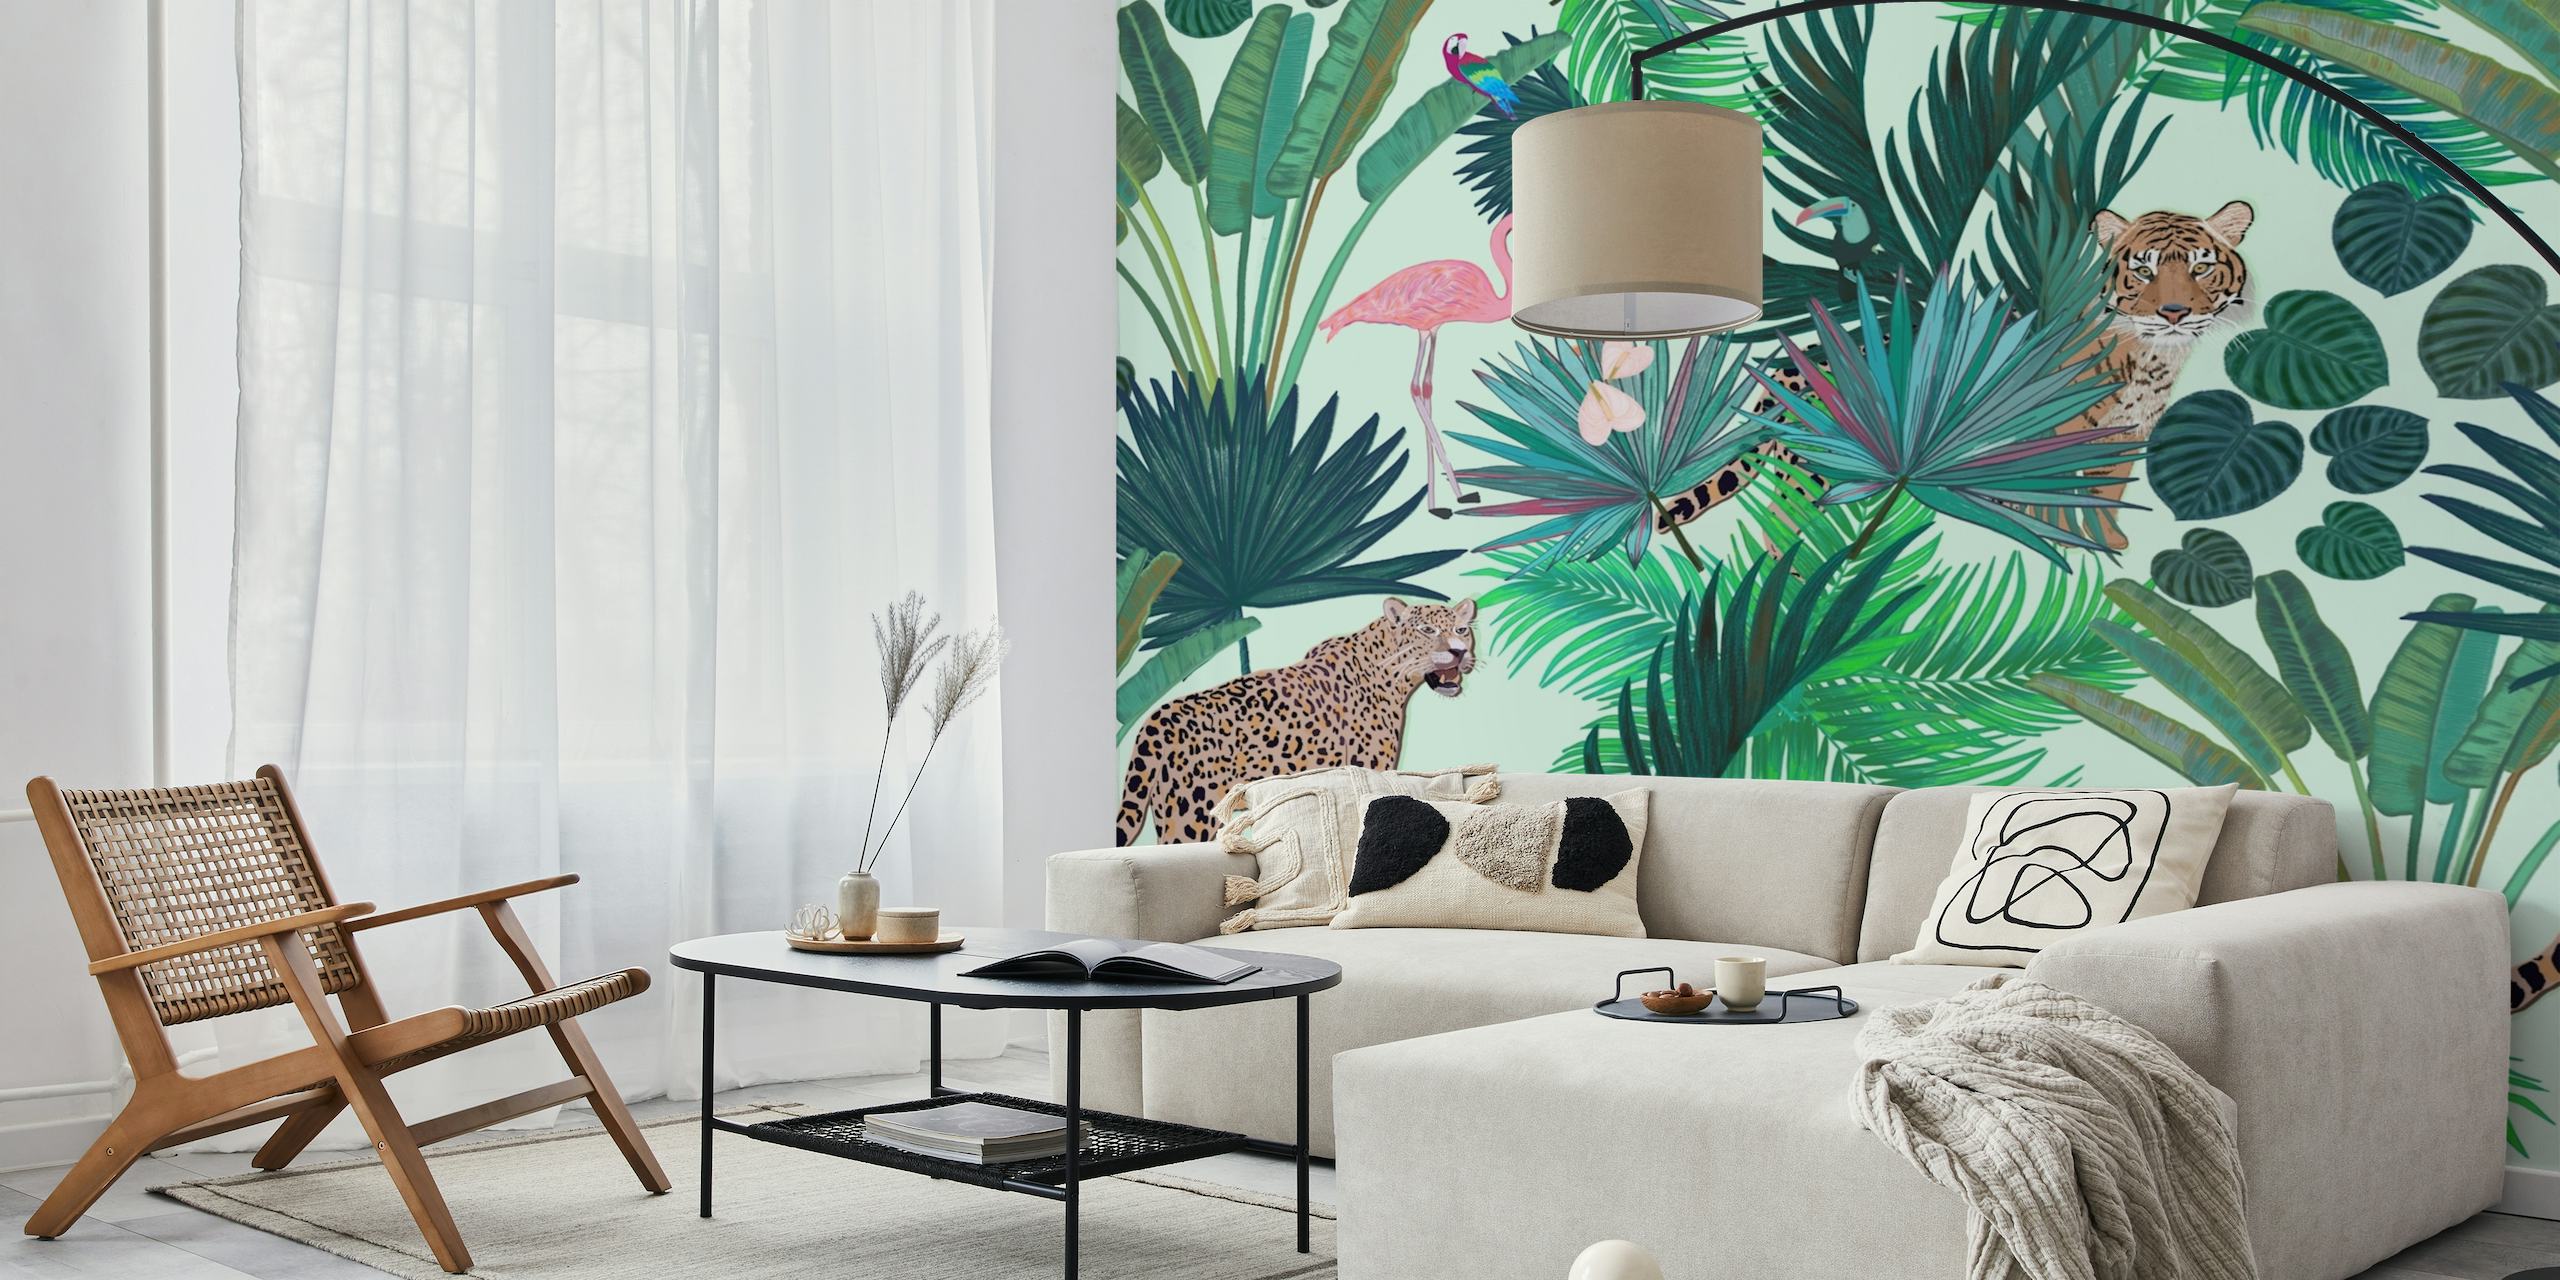 Zidni mural tropske šume s tigrovima i flamingosima u zelenilu